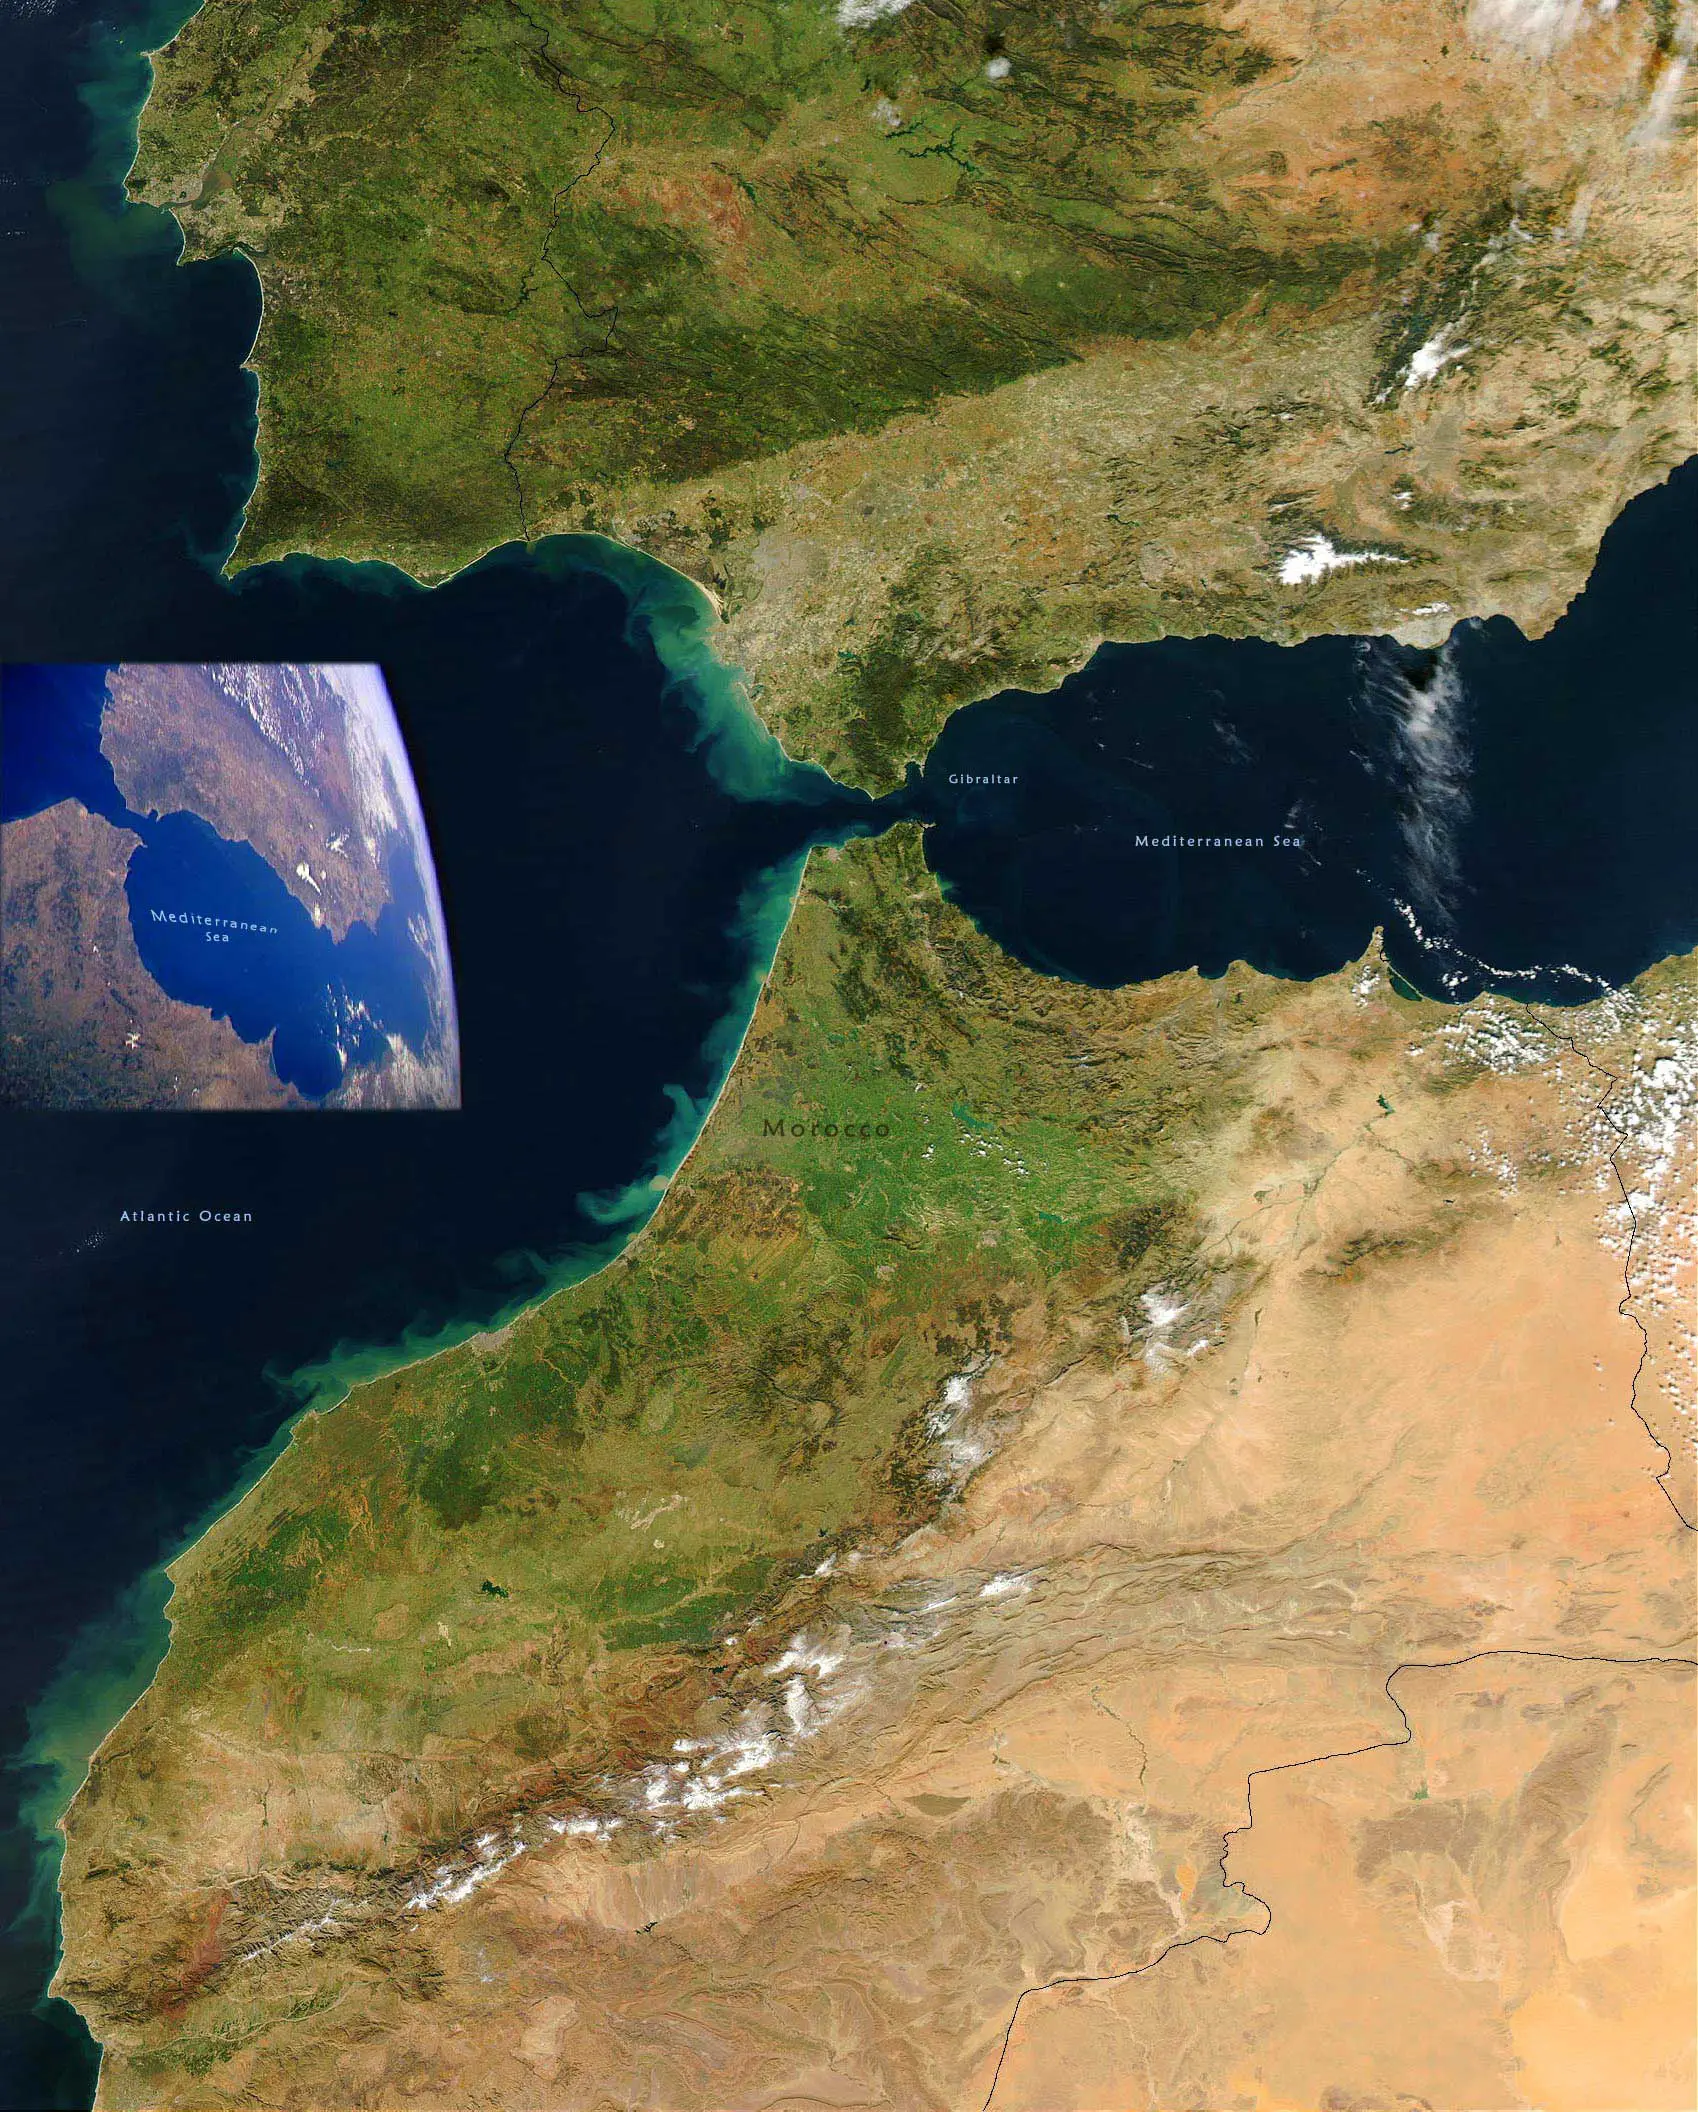 Morocco Spain Satellite Image